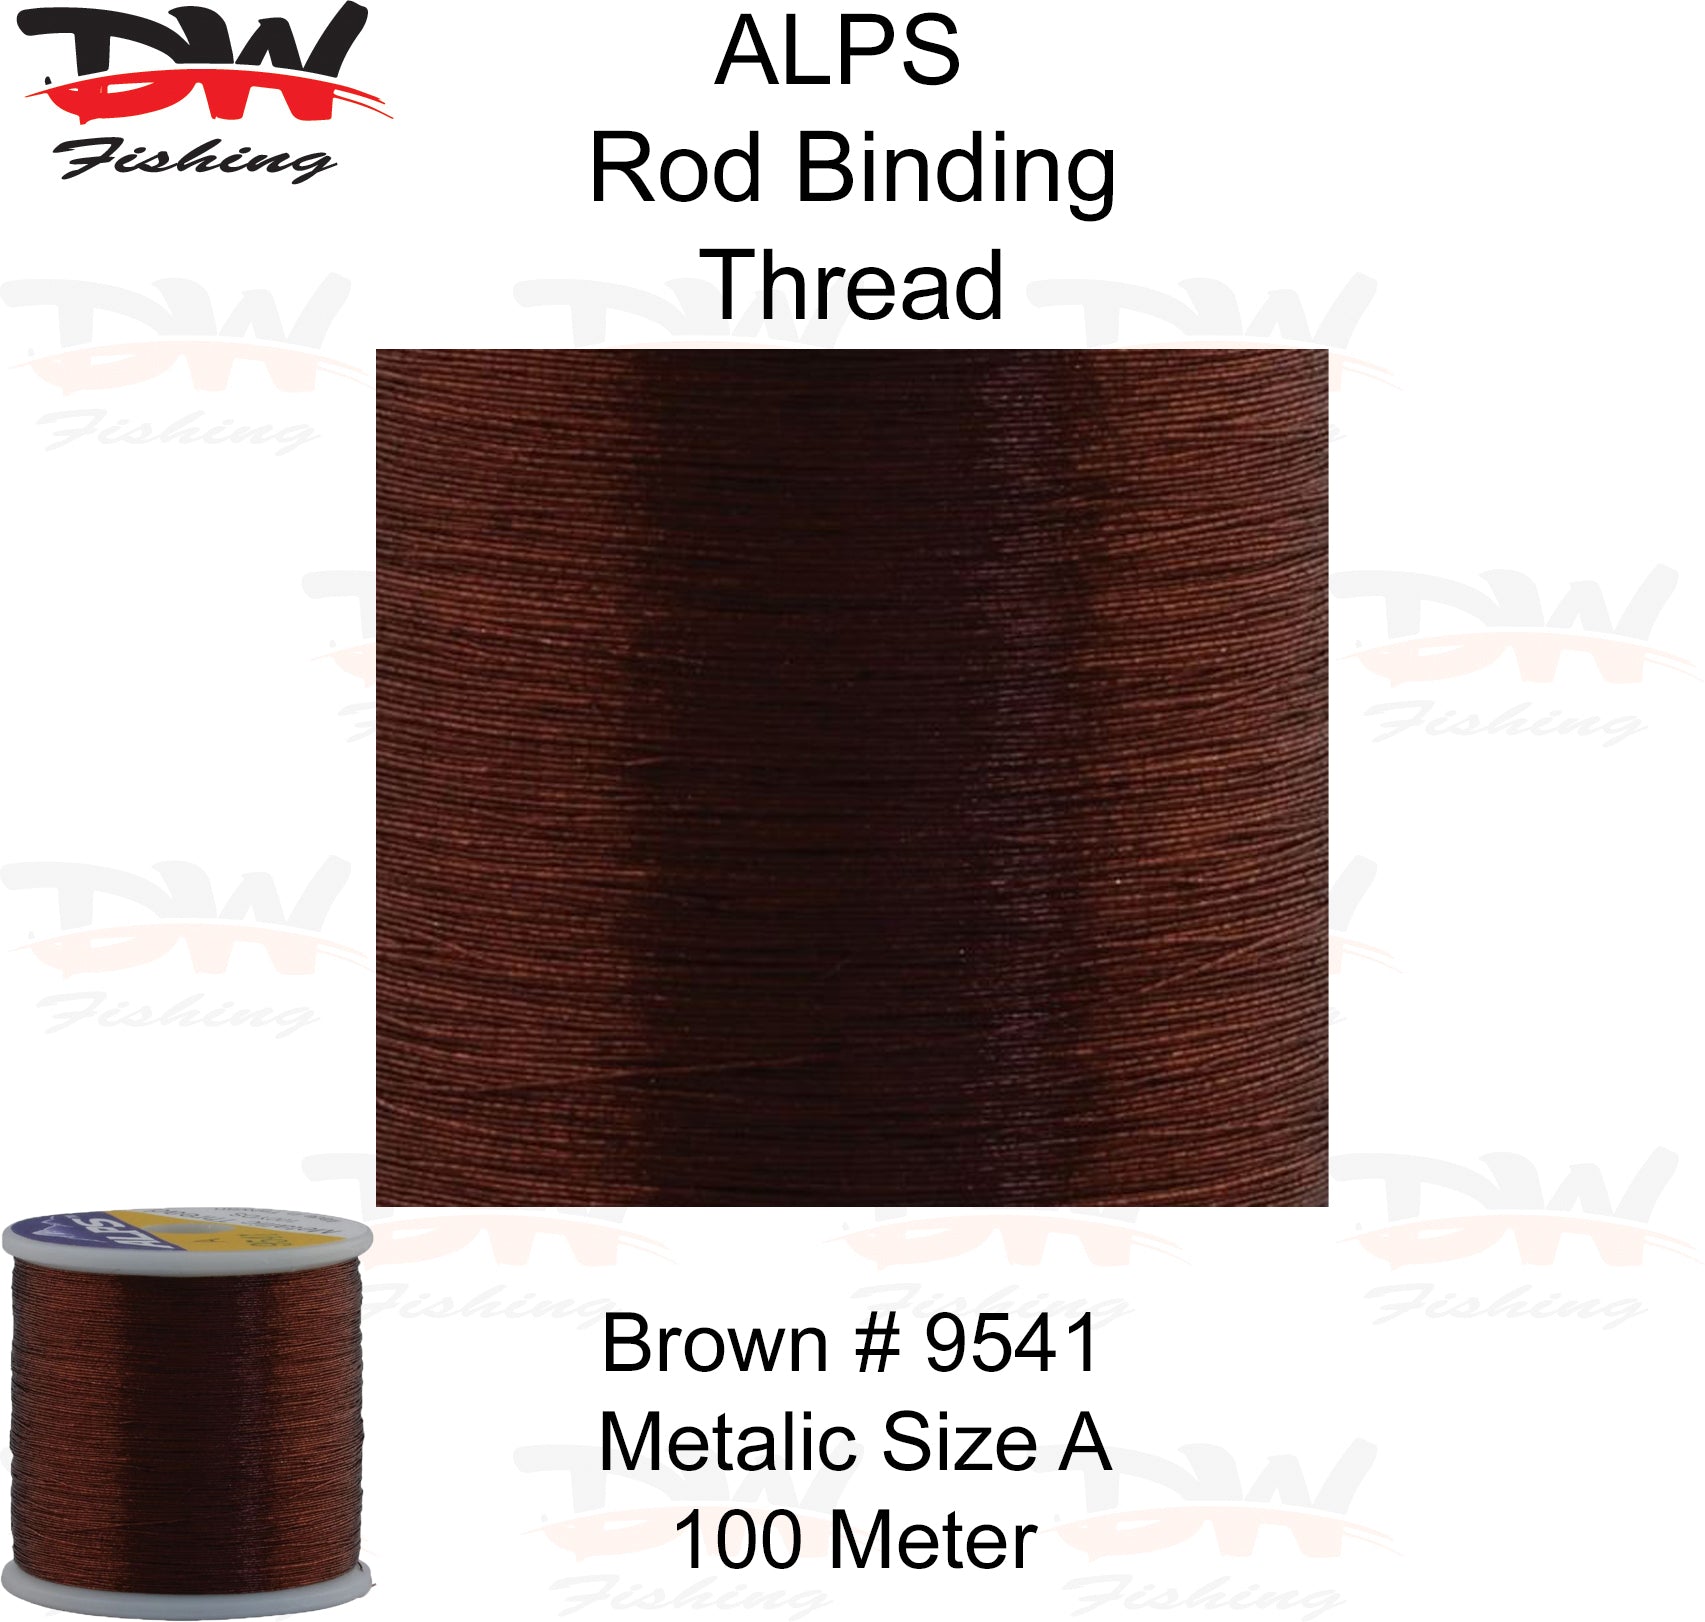 ALPS metalic rod binding thread brown